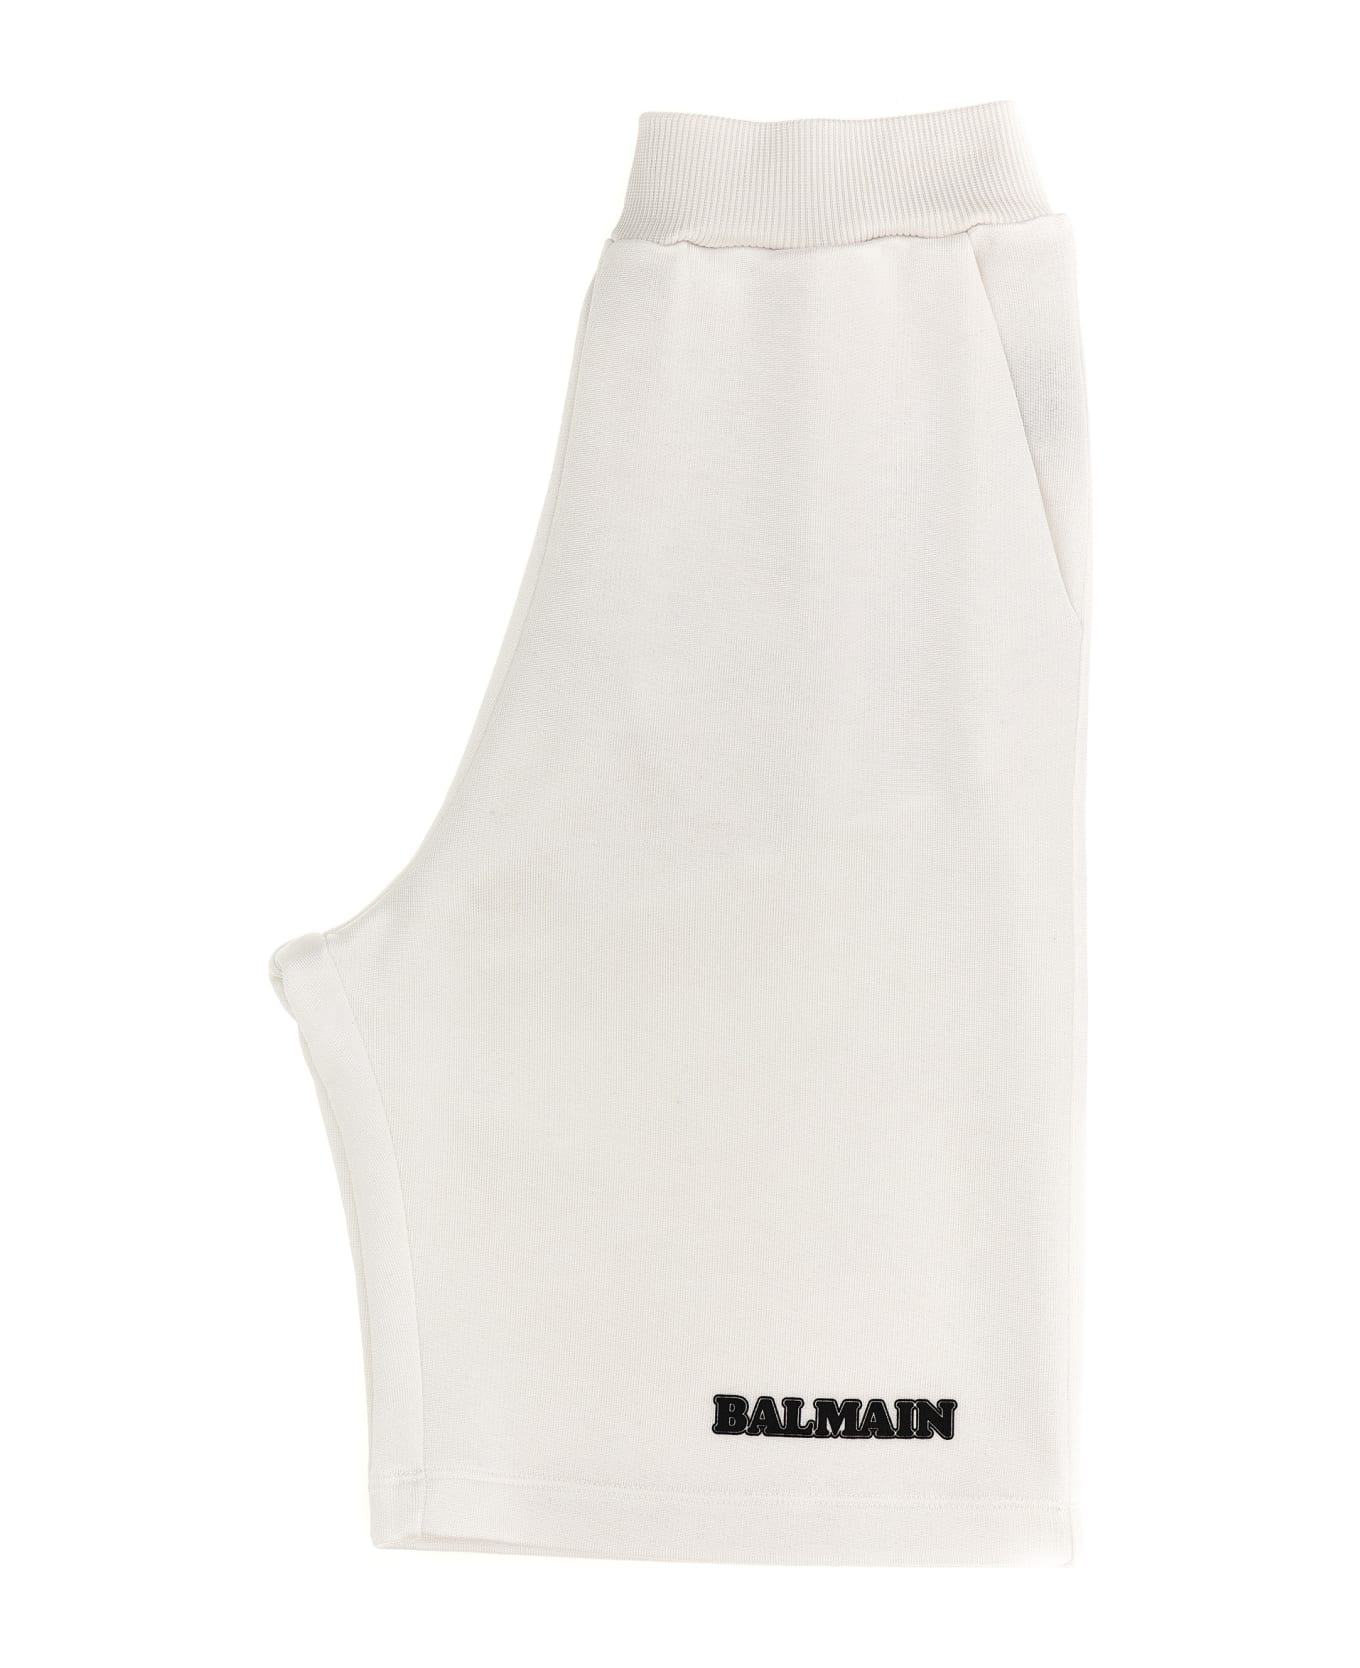 Balmain Logo Print Tracksuit - White/Black